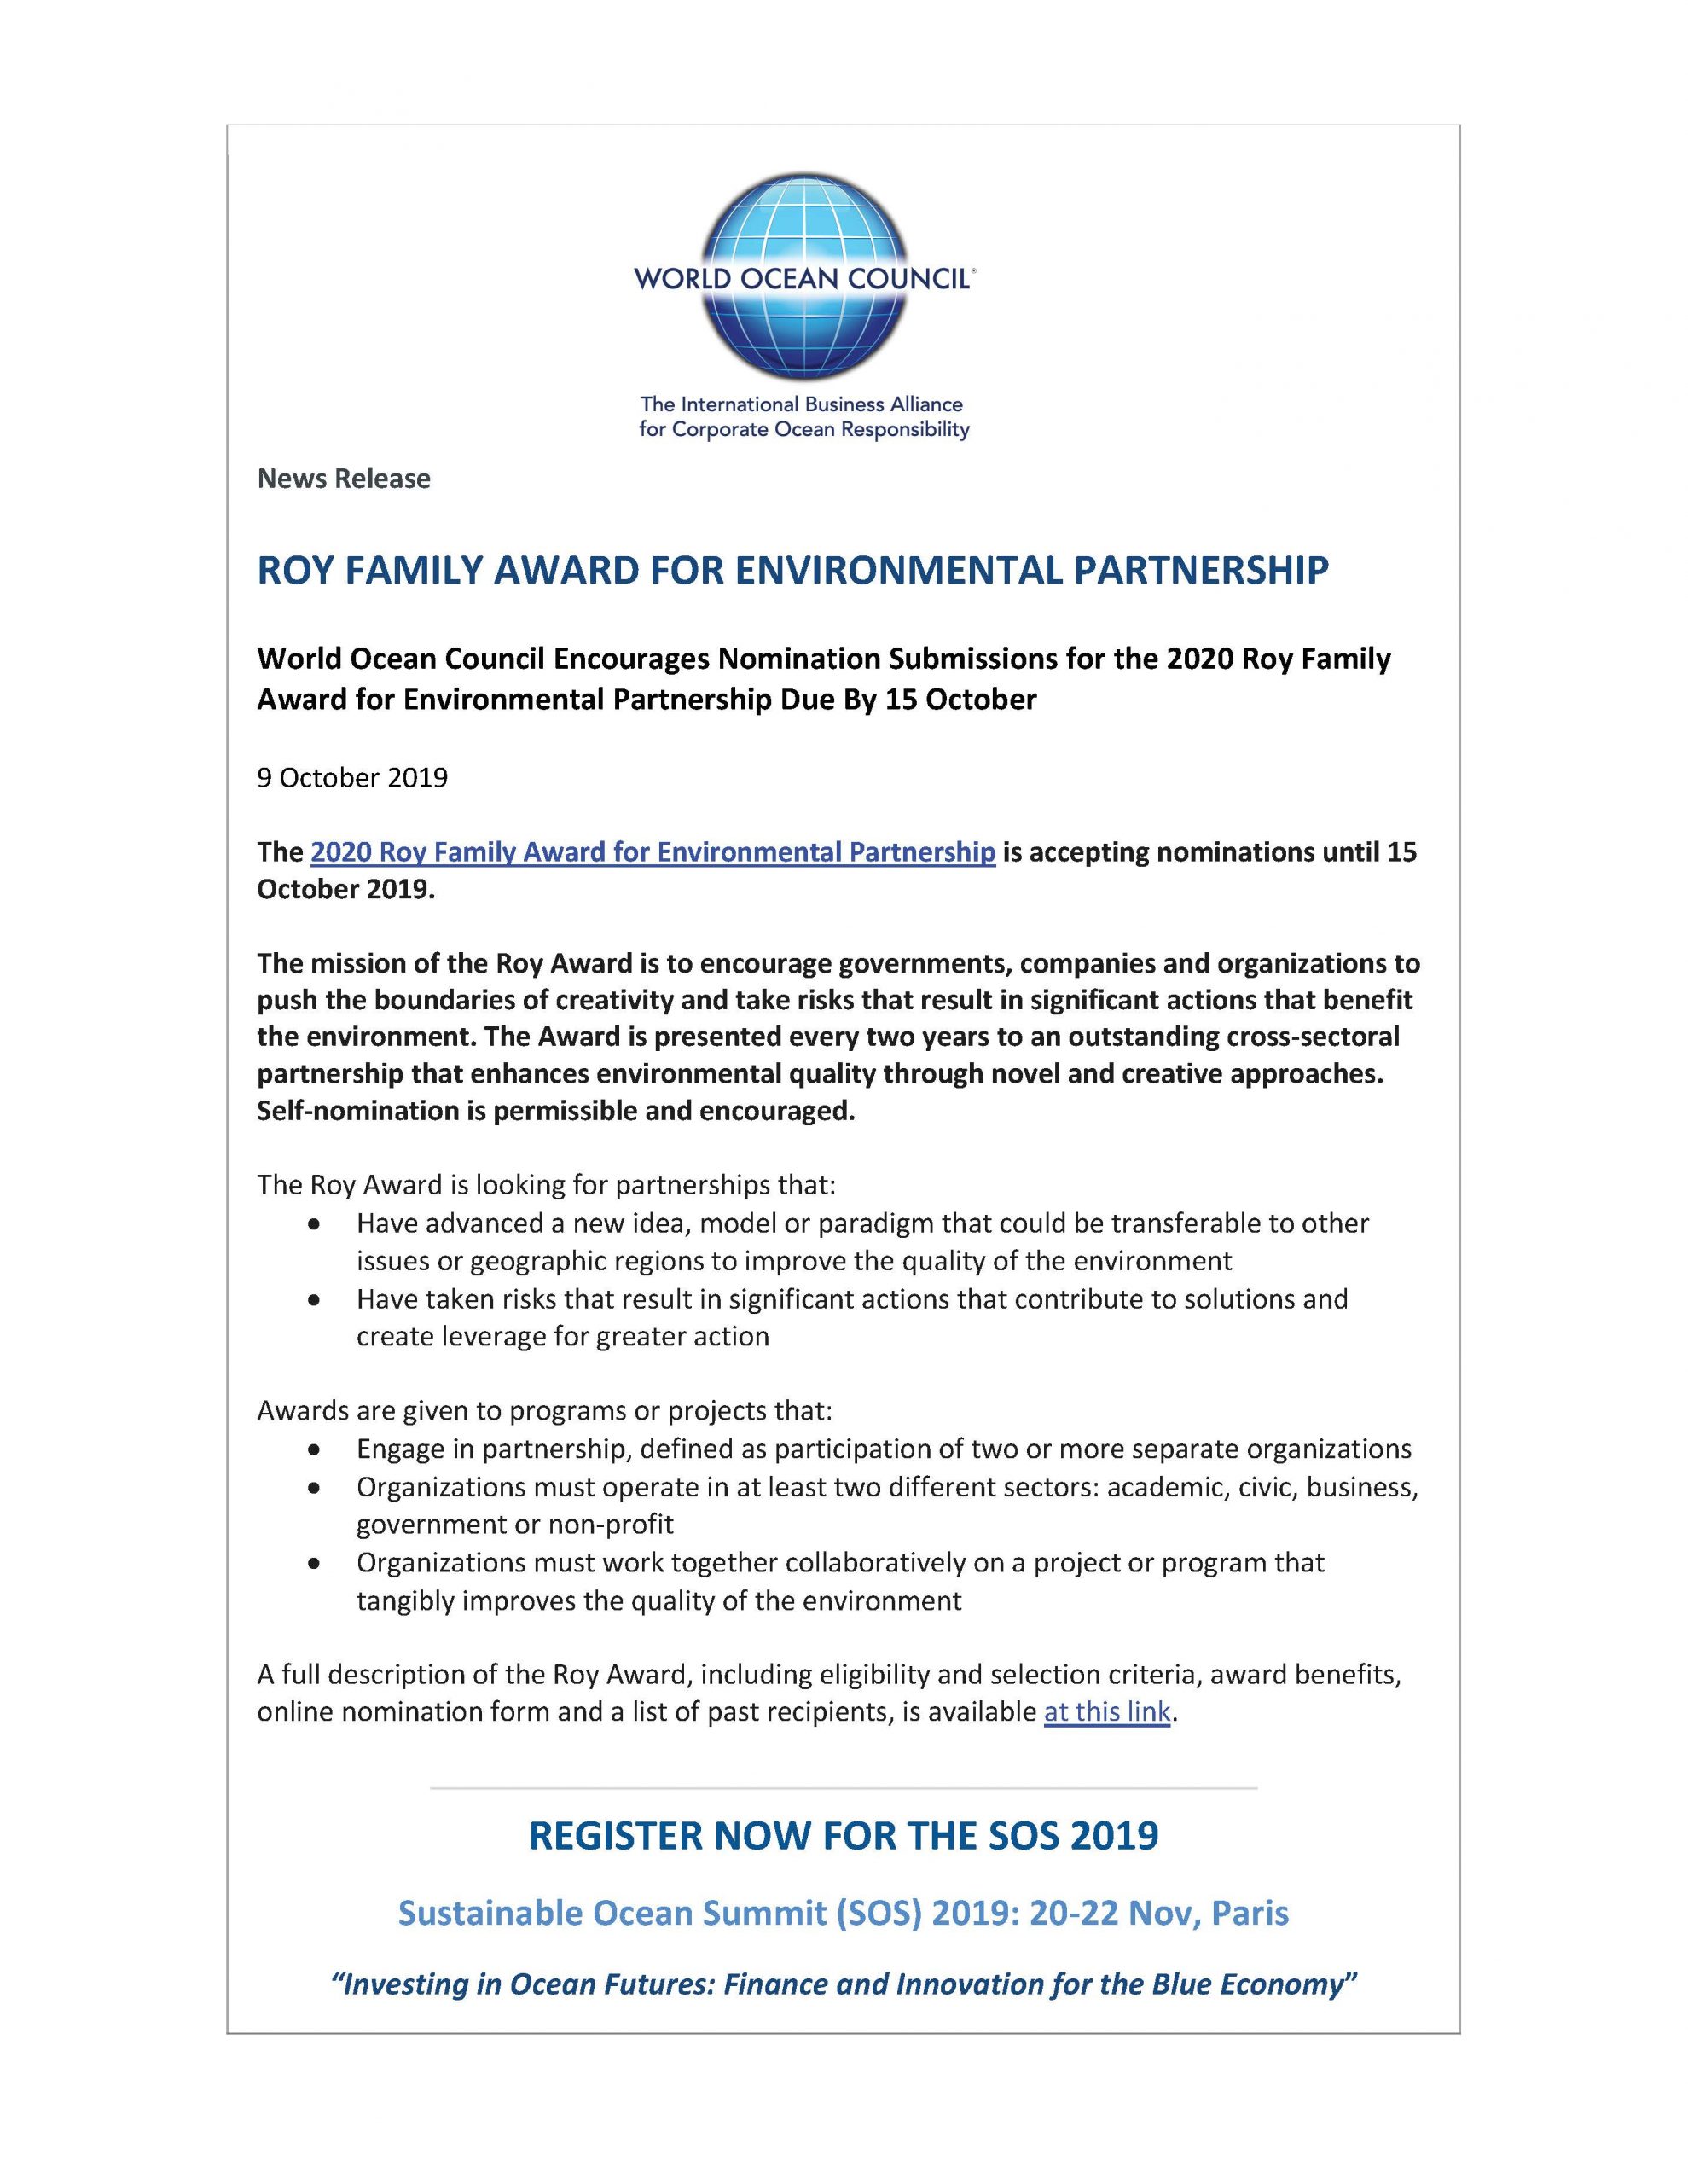 Roy Family Award For Environmental Partnership - 9 October